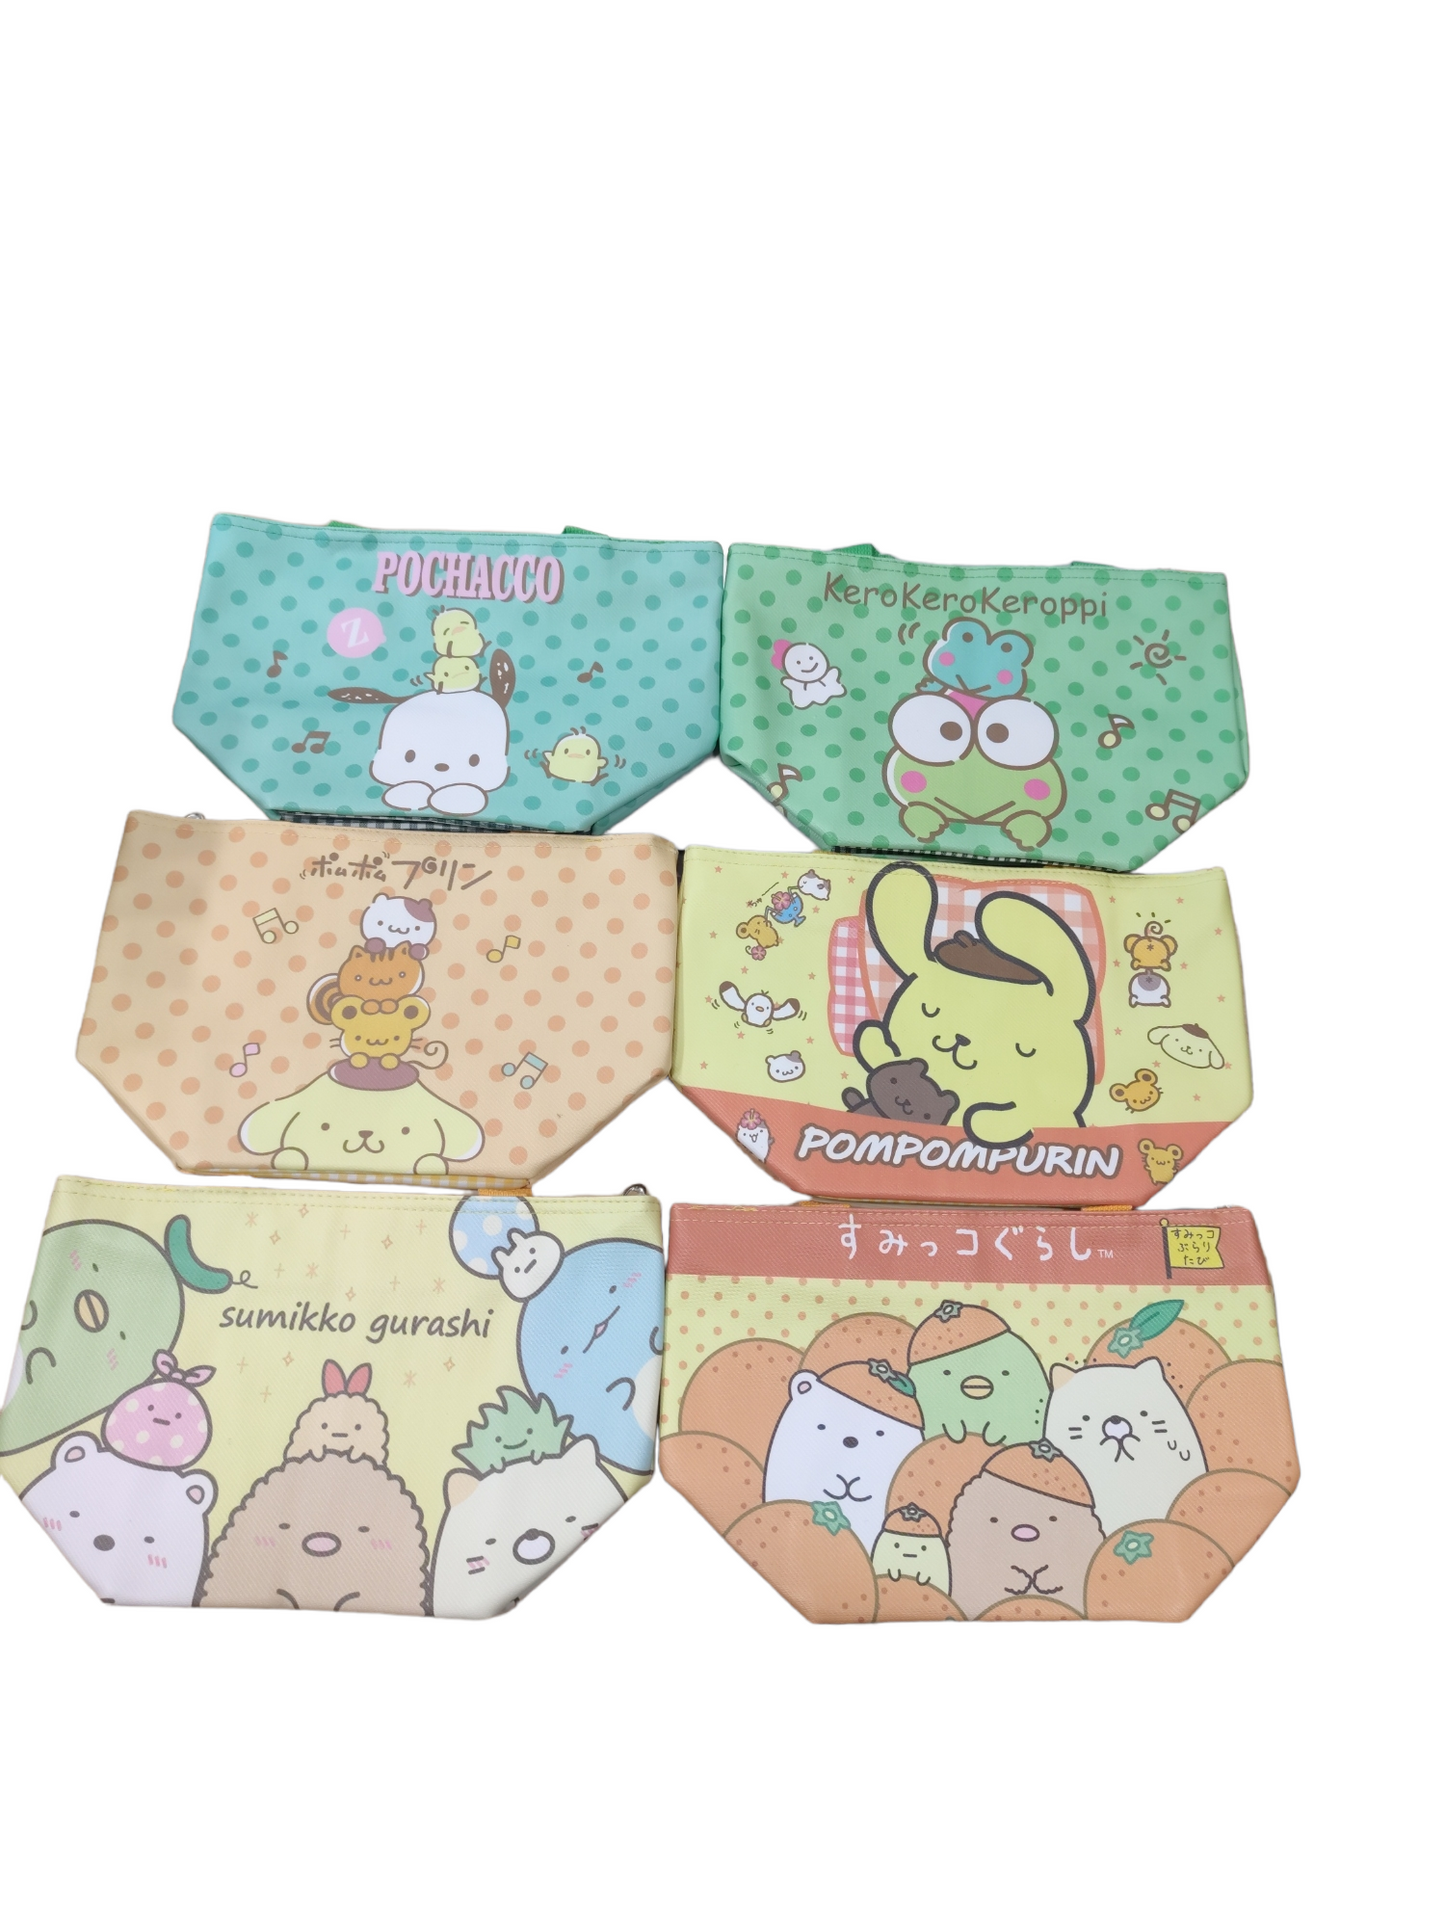 Sanrio Cool Bag School Picnic Lunch 卡通保温袋 32cmx20cmx14cm